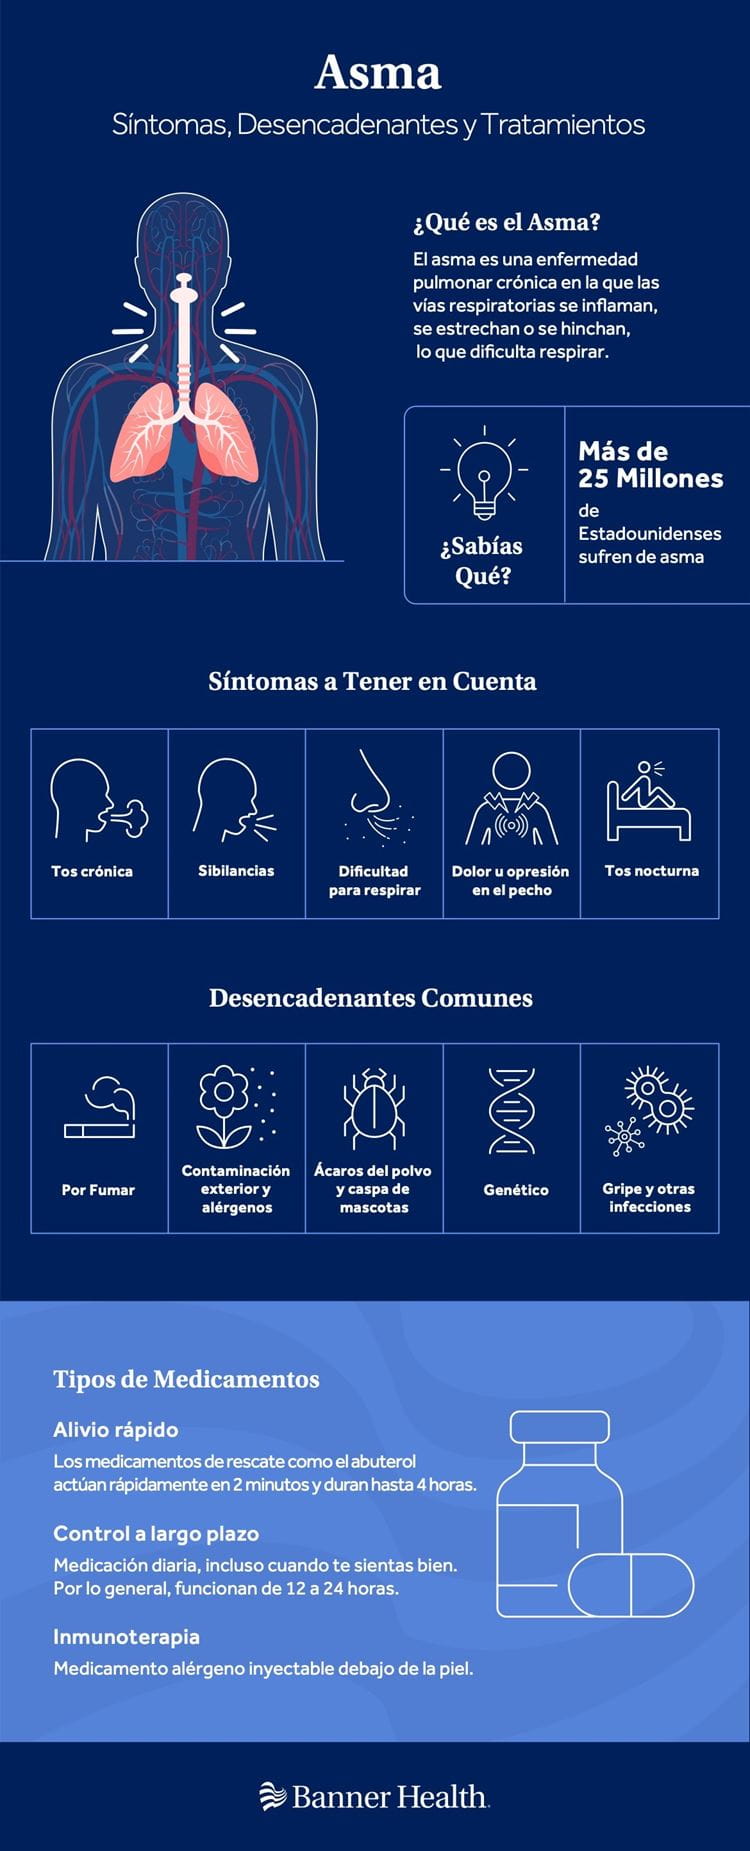 Asma Spanish Infographic